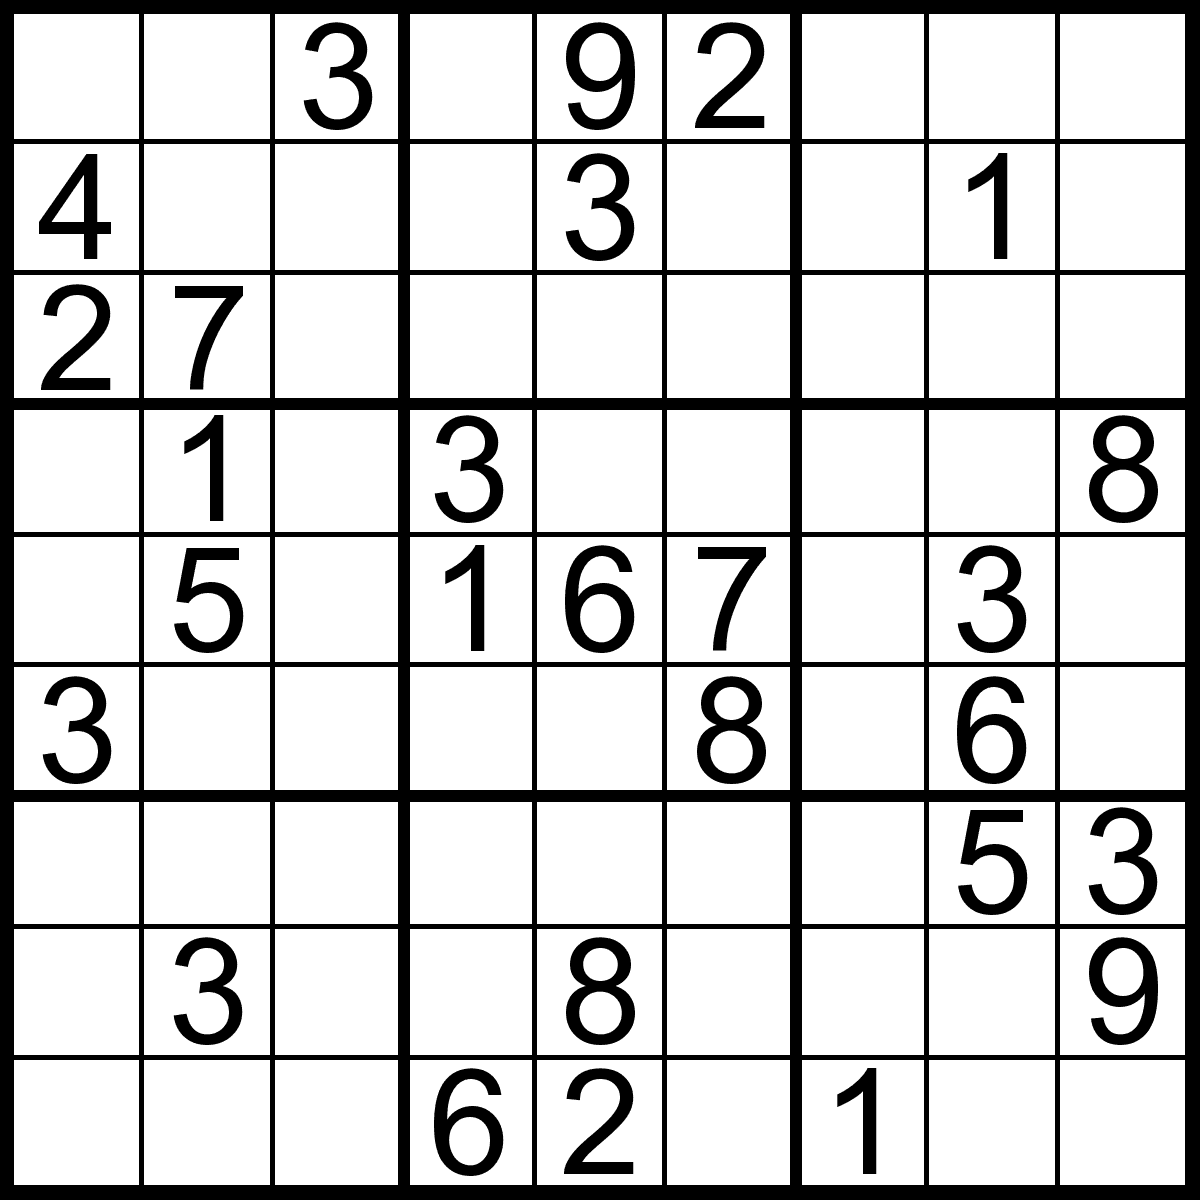 Play Sudoku Online Printable Sudoku Free Sudoku Games